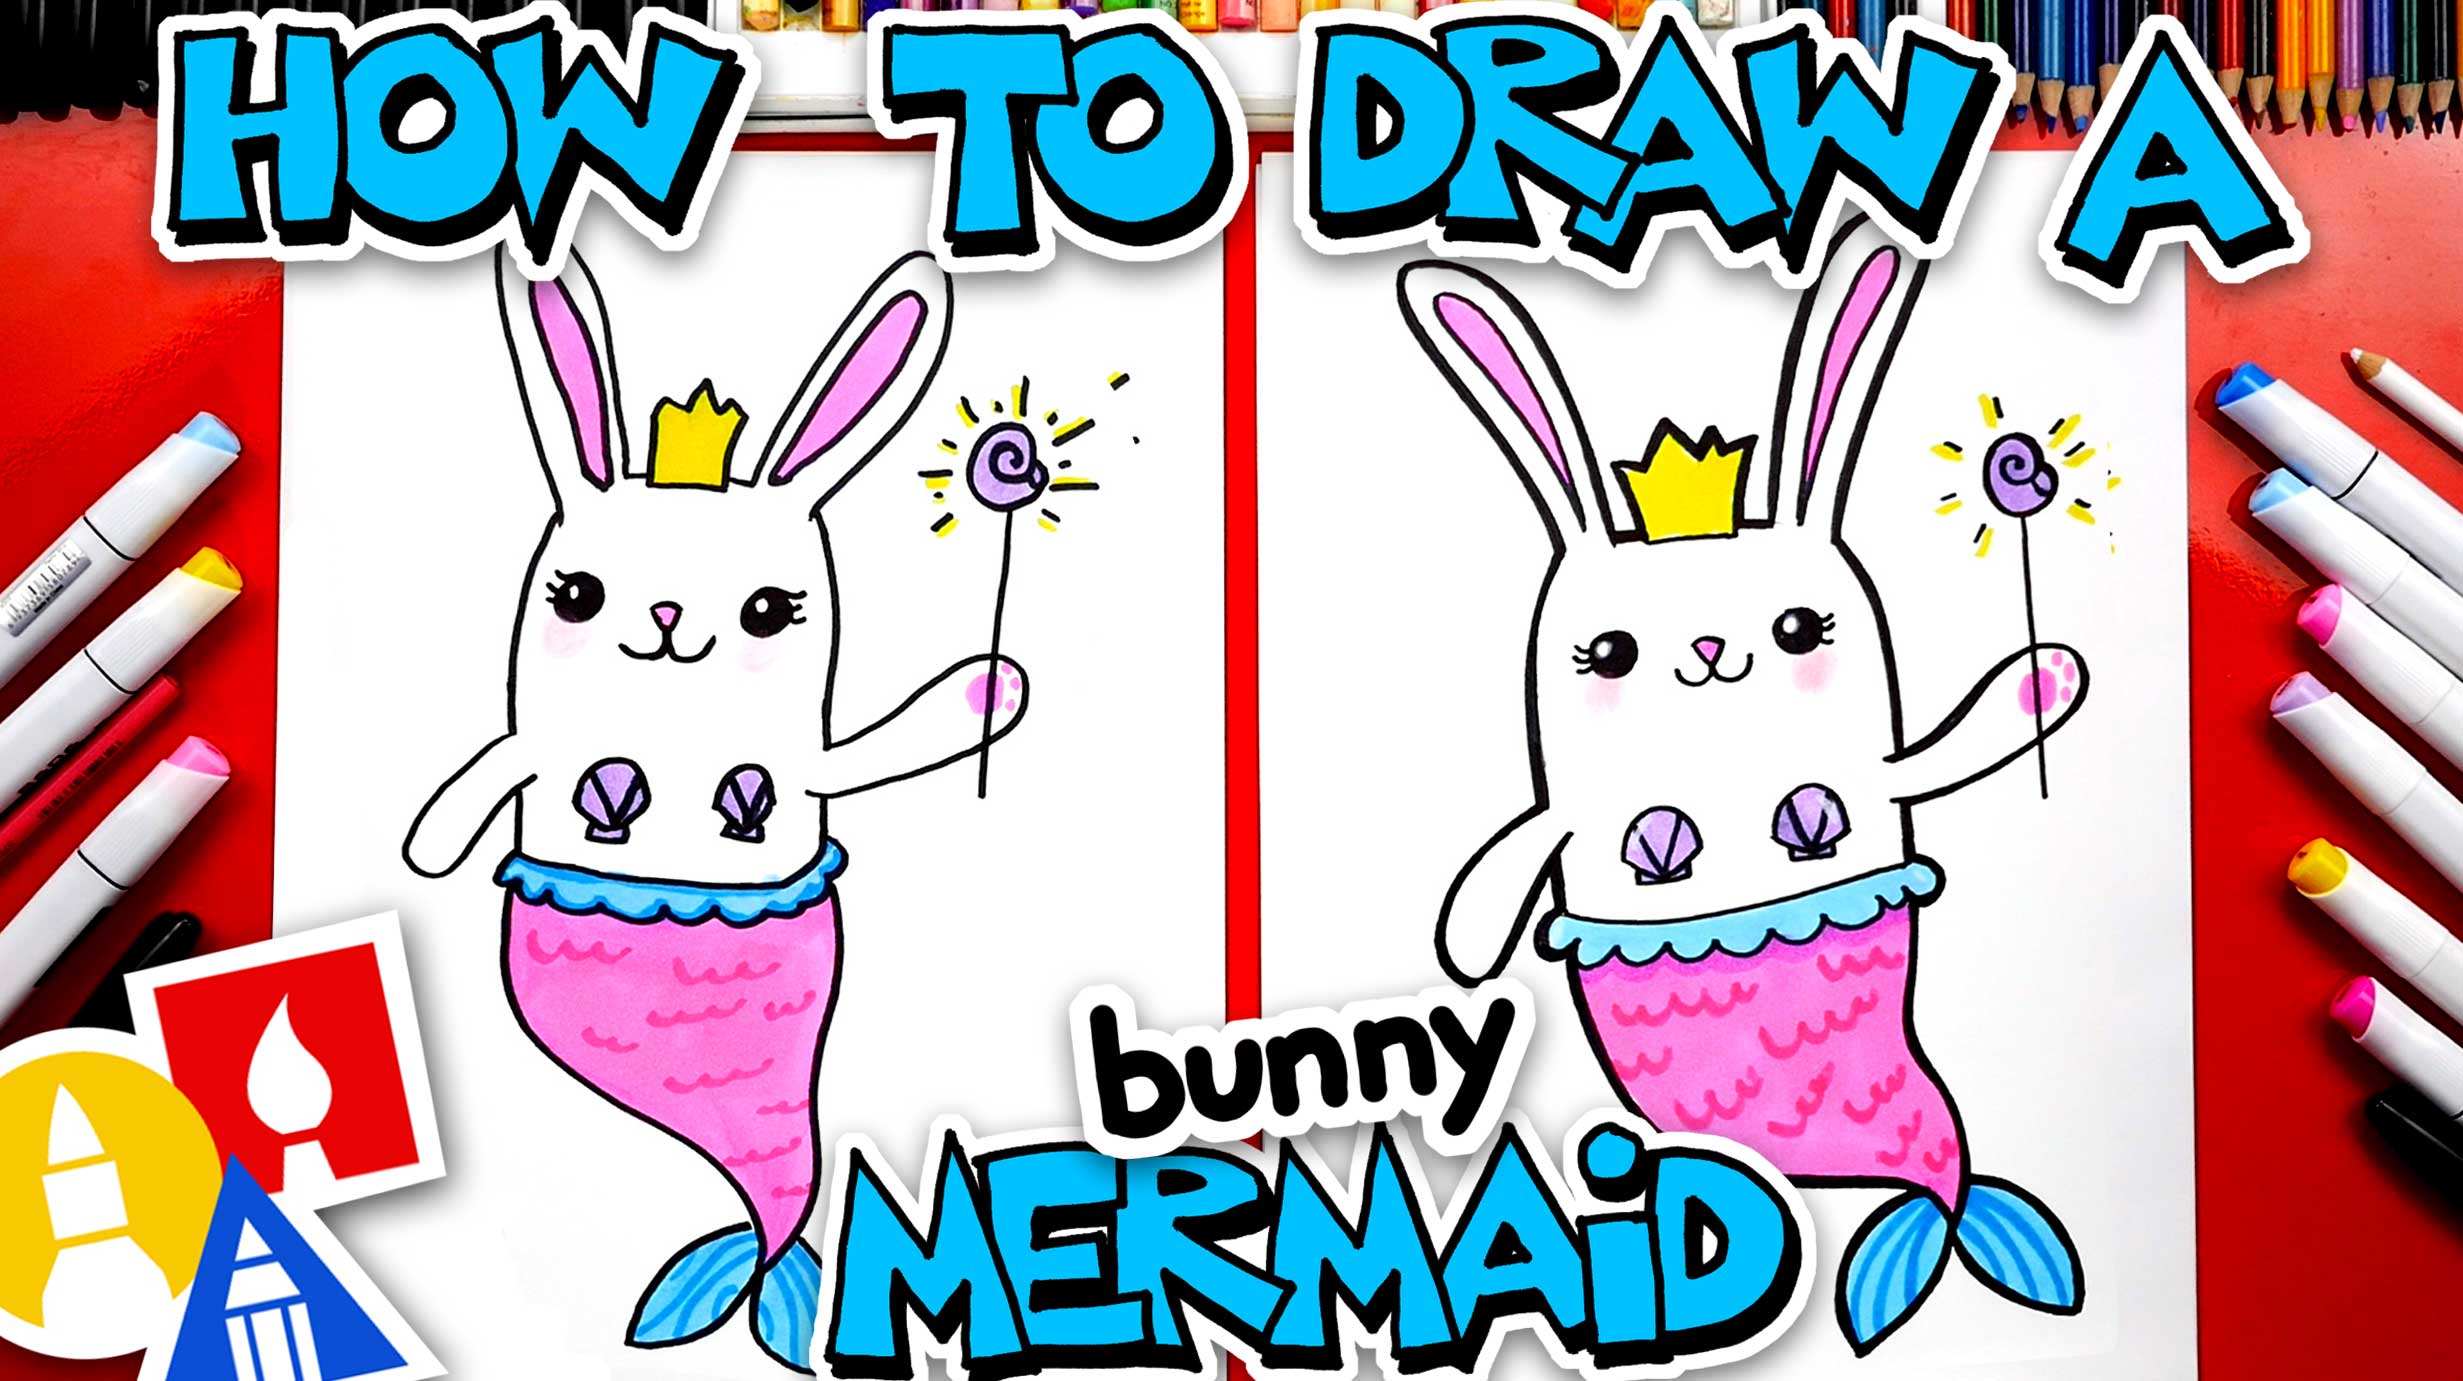 How To Draw A Cute Bunny Mermaid - Art For Kids Hub